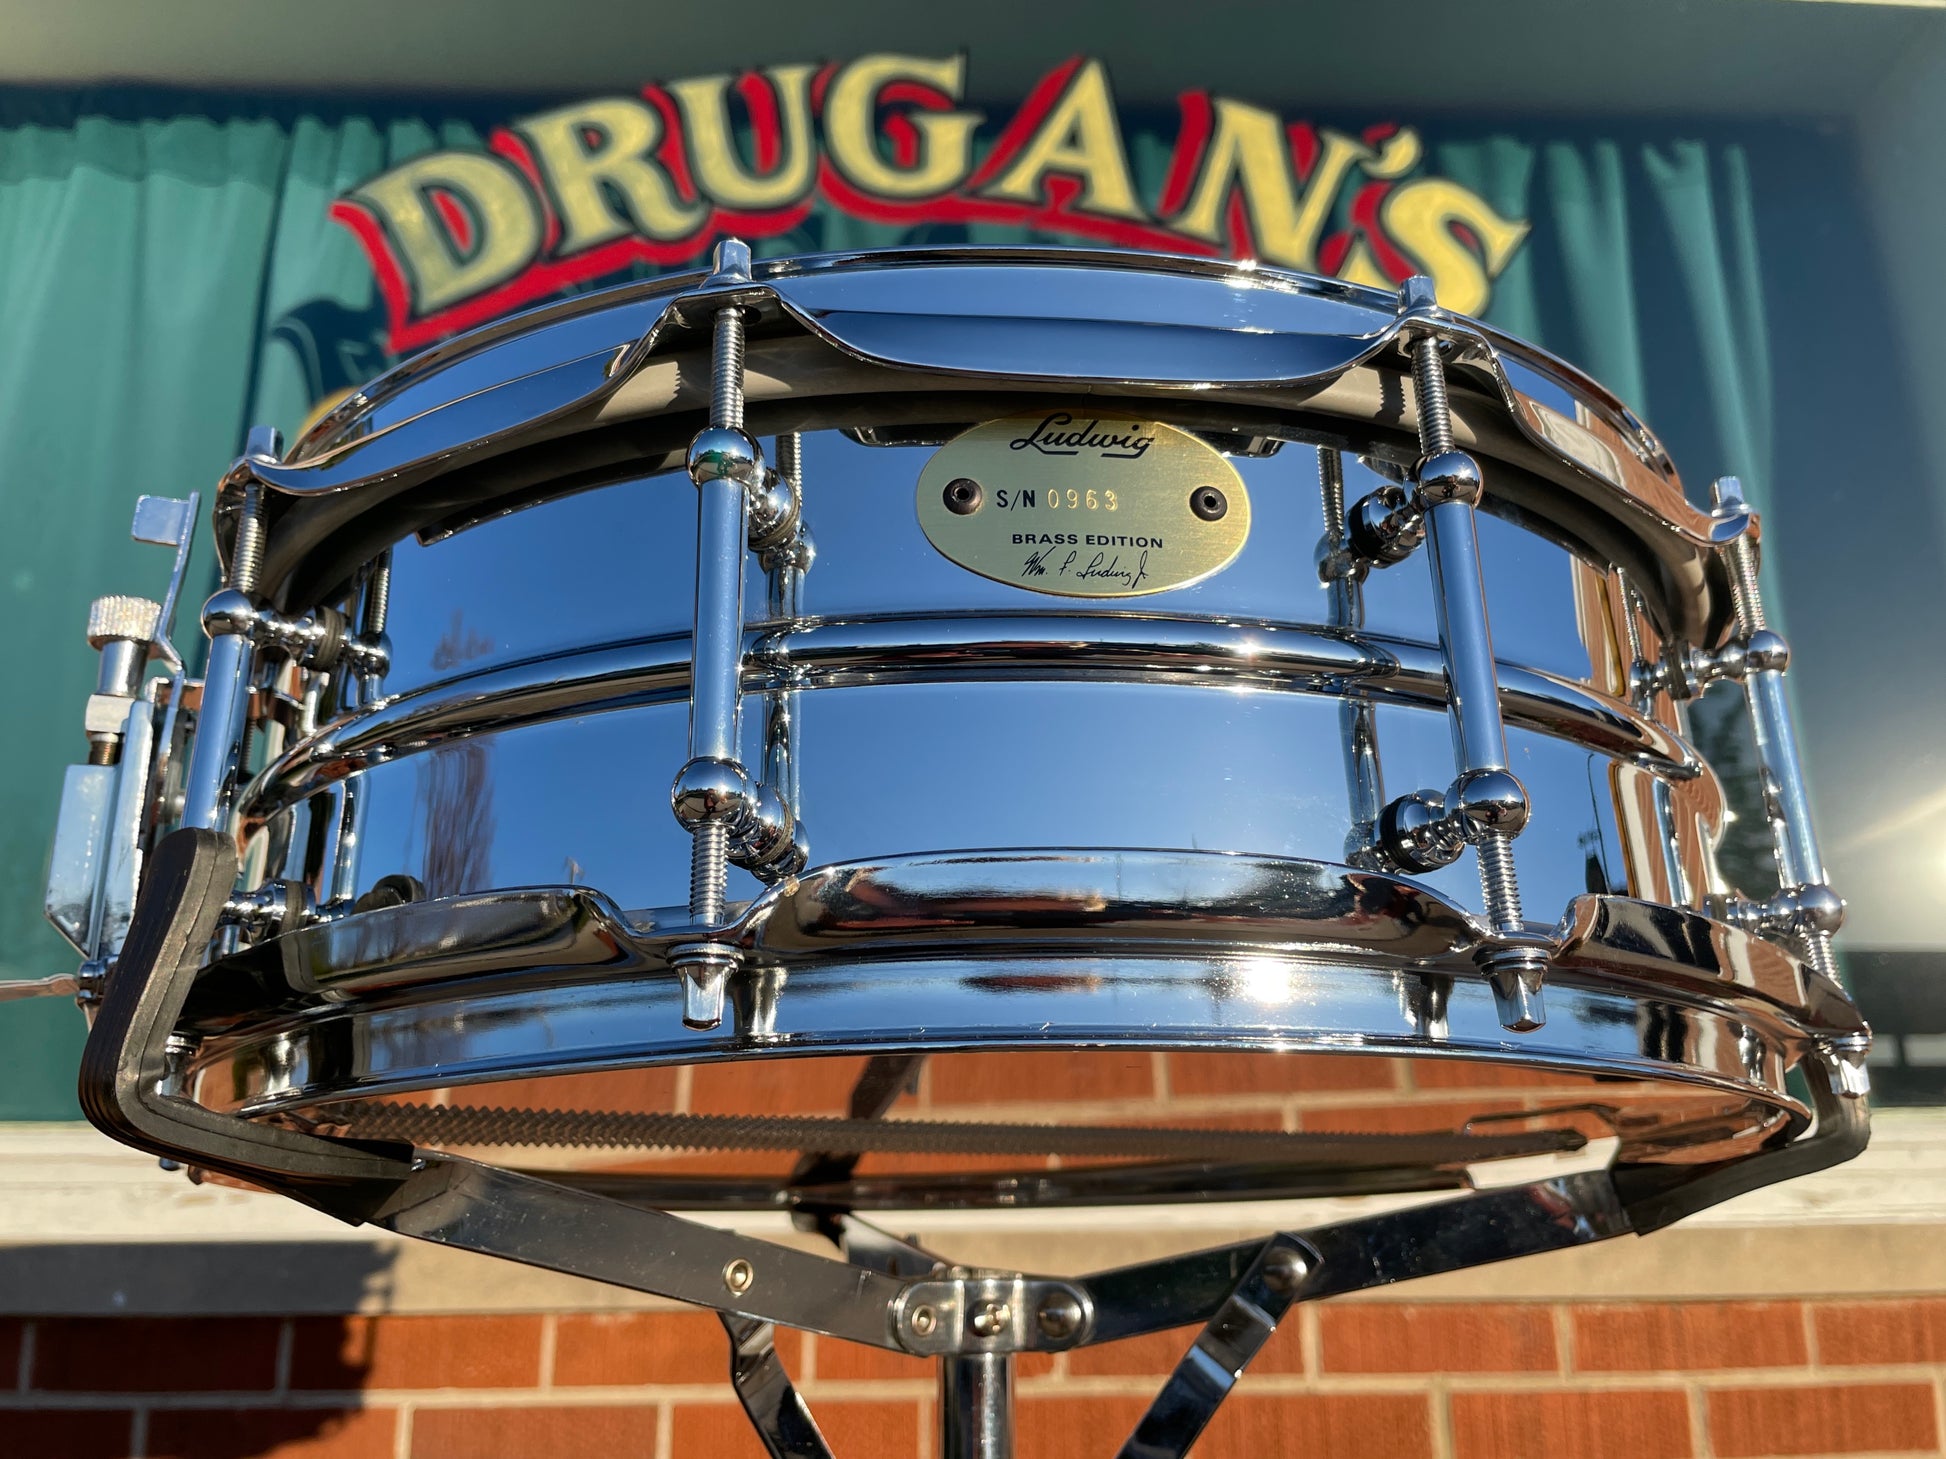 Pearl 6.5x14 Sensitone Black Nickel Over Brass Snare Drum